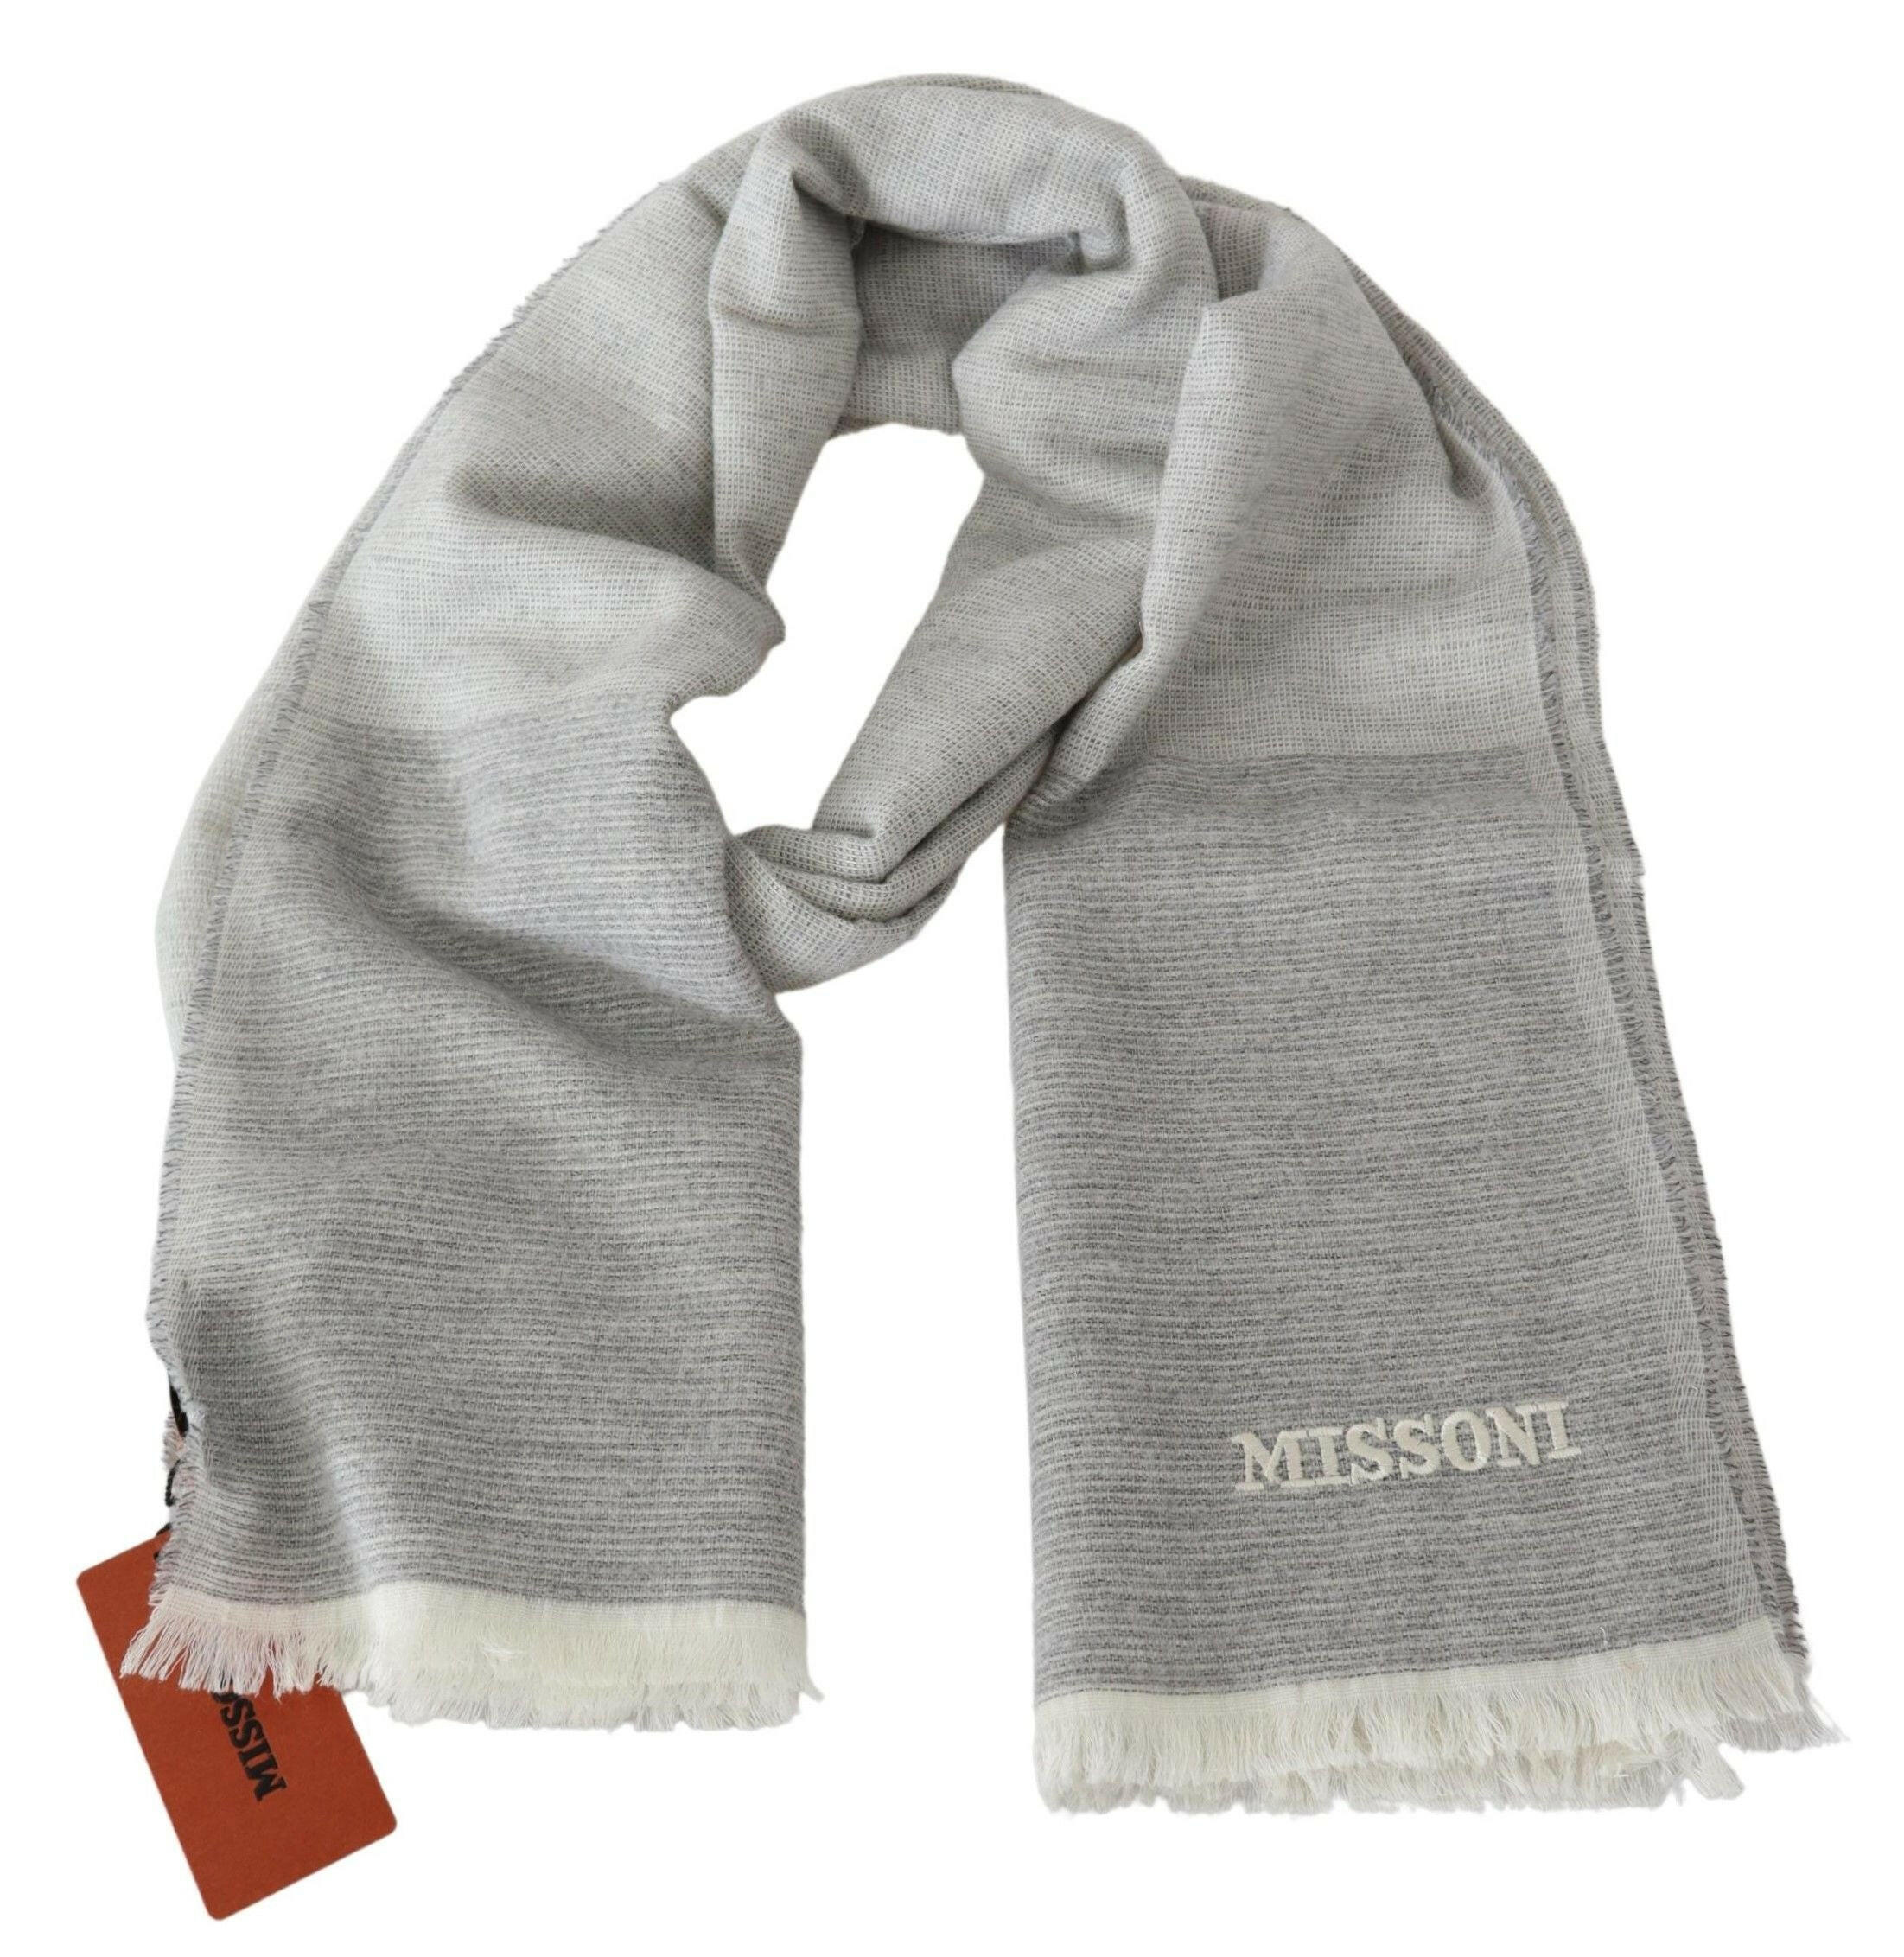 Missoni Beige 100% Wool Unisex Neck Wrap Scarf - GENUINE AUTHENTIC BRAND LLC  